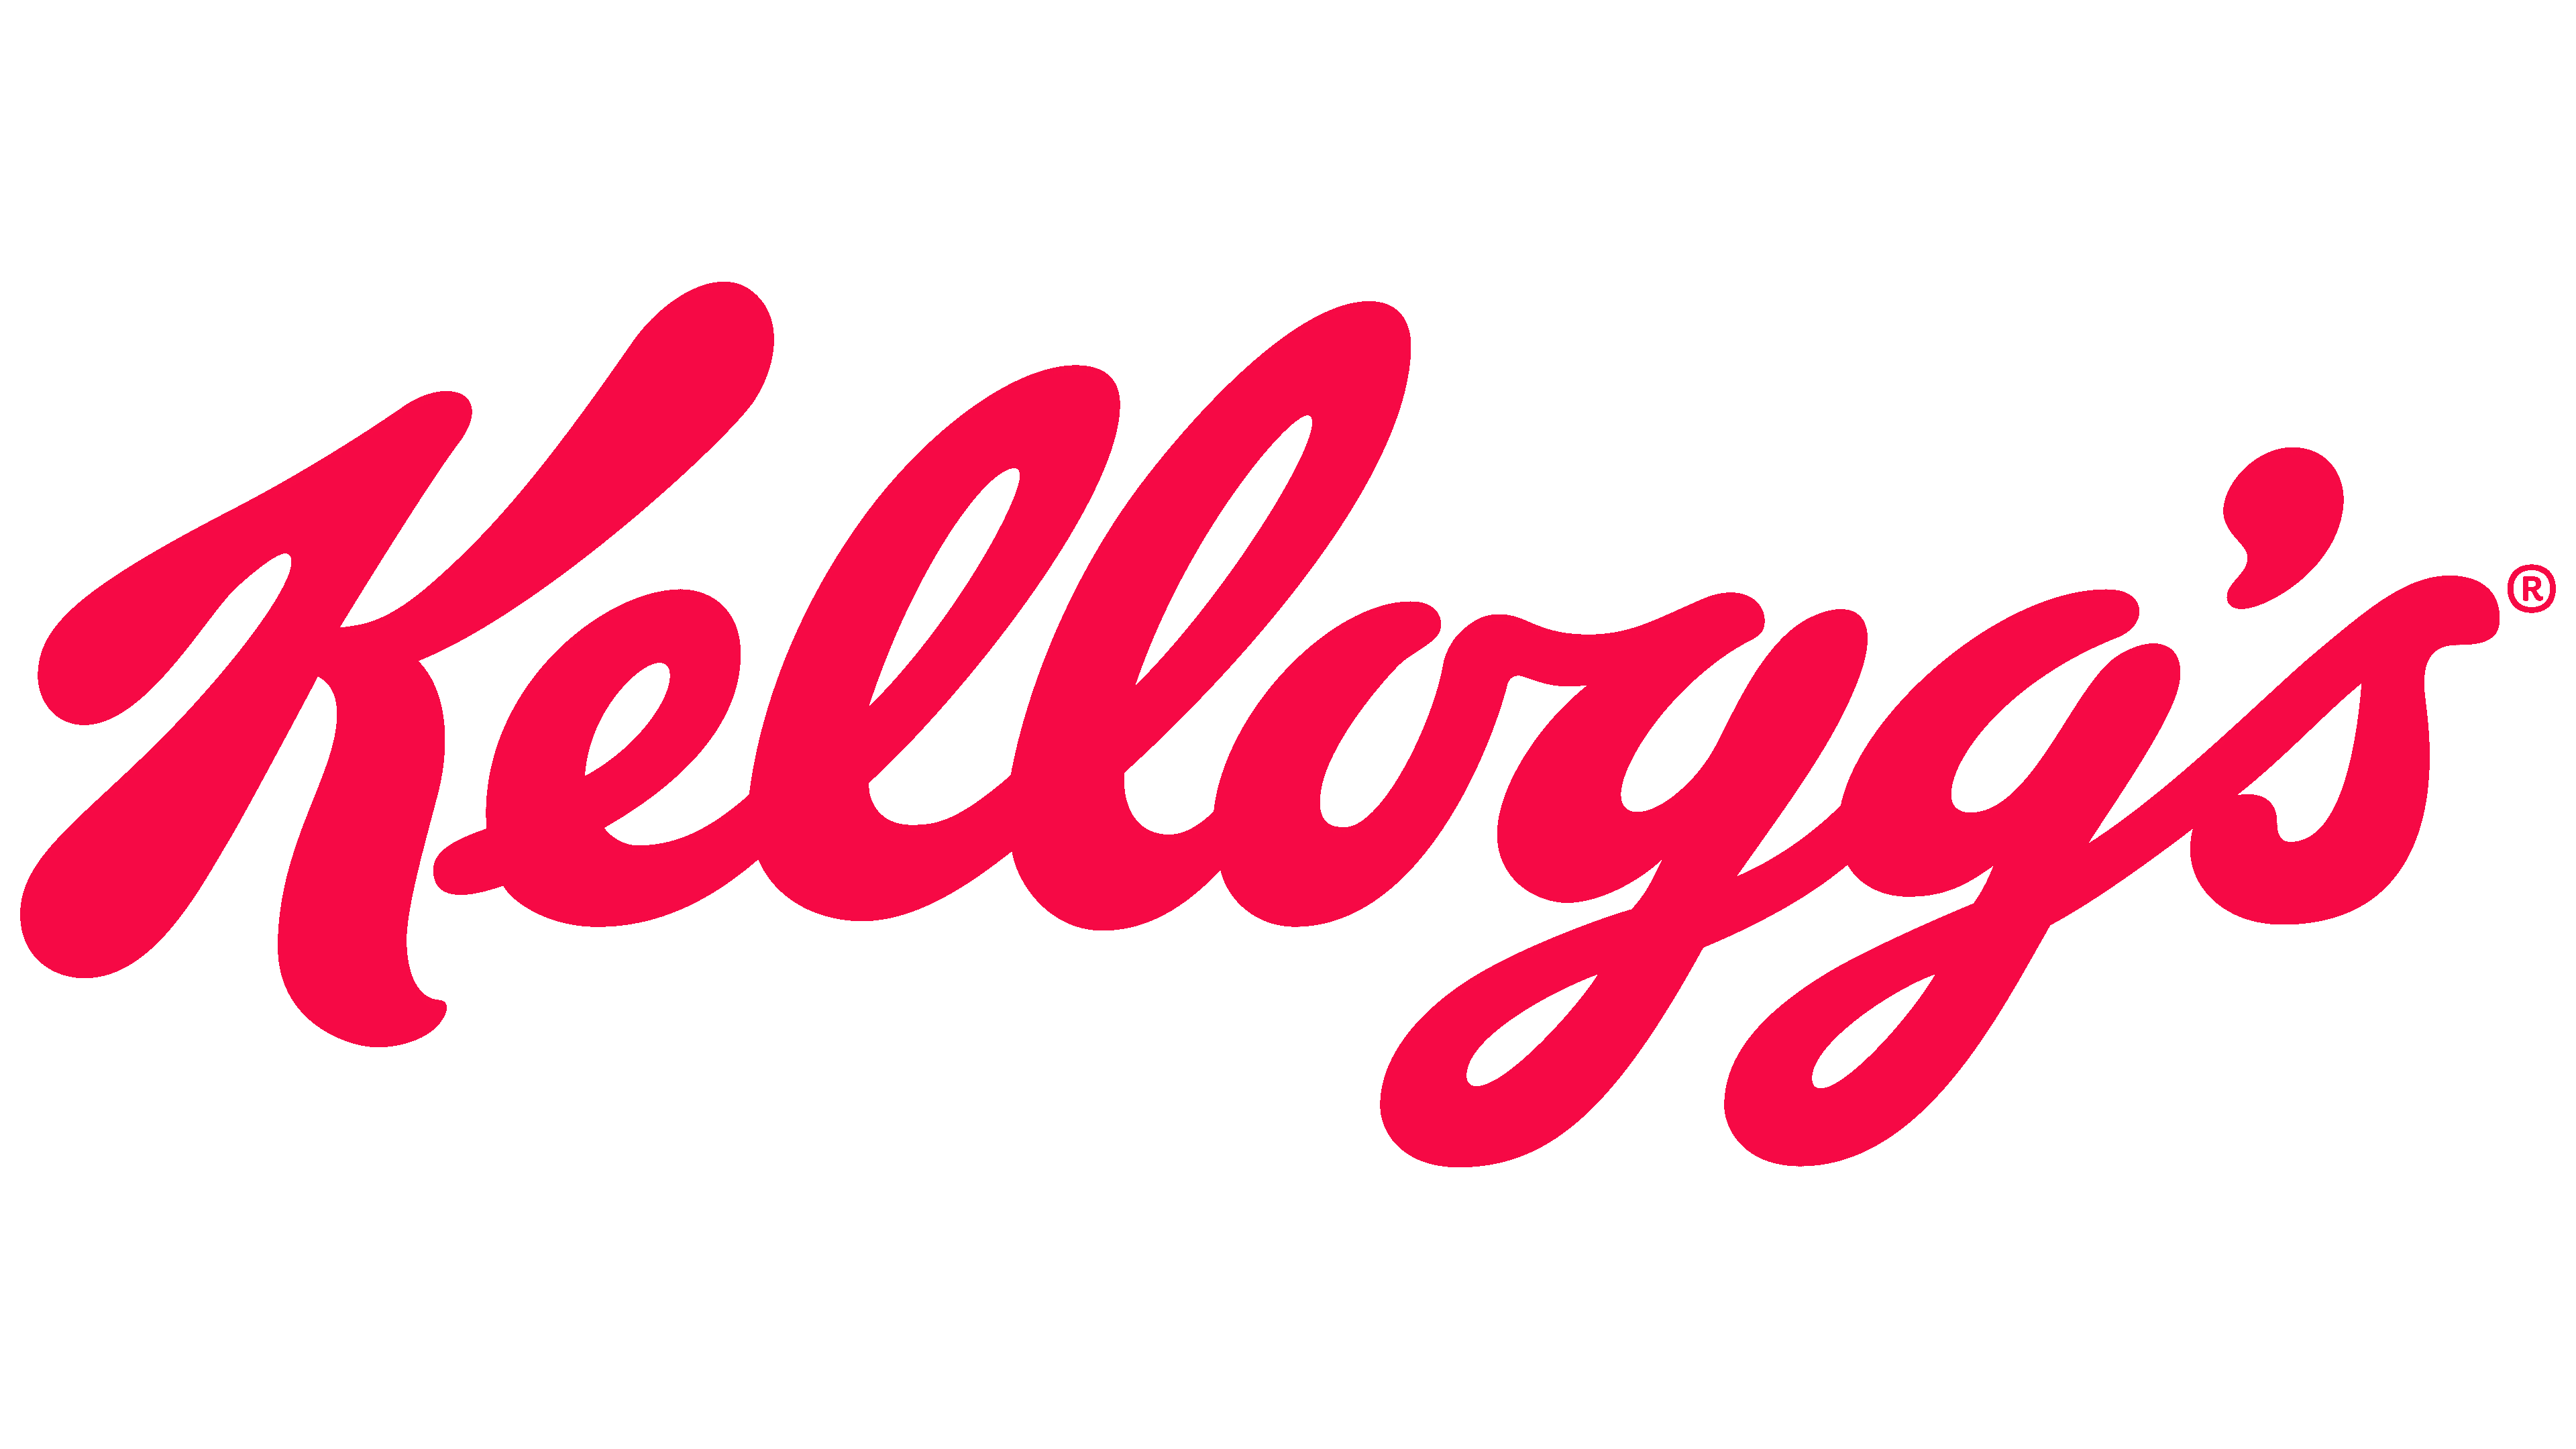 Kellaggs